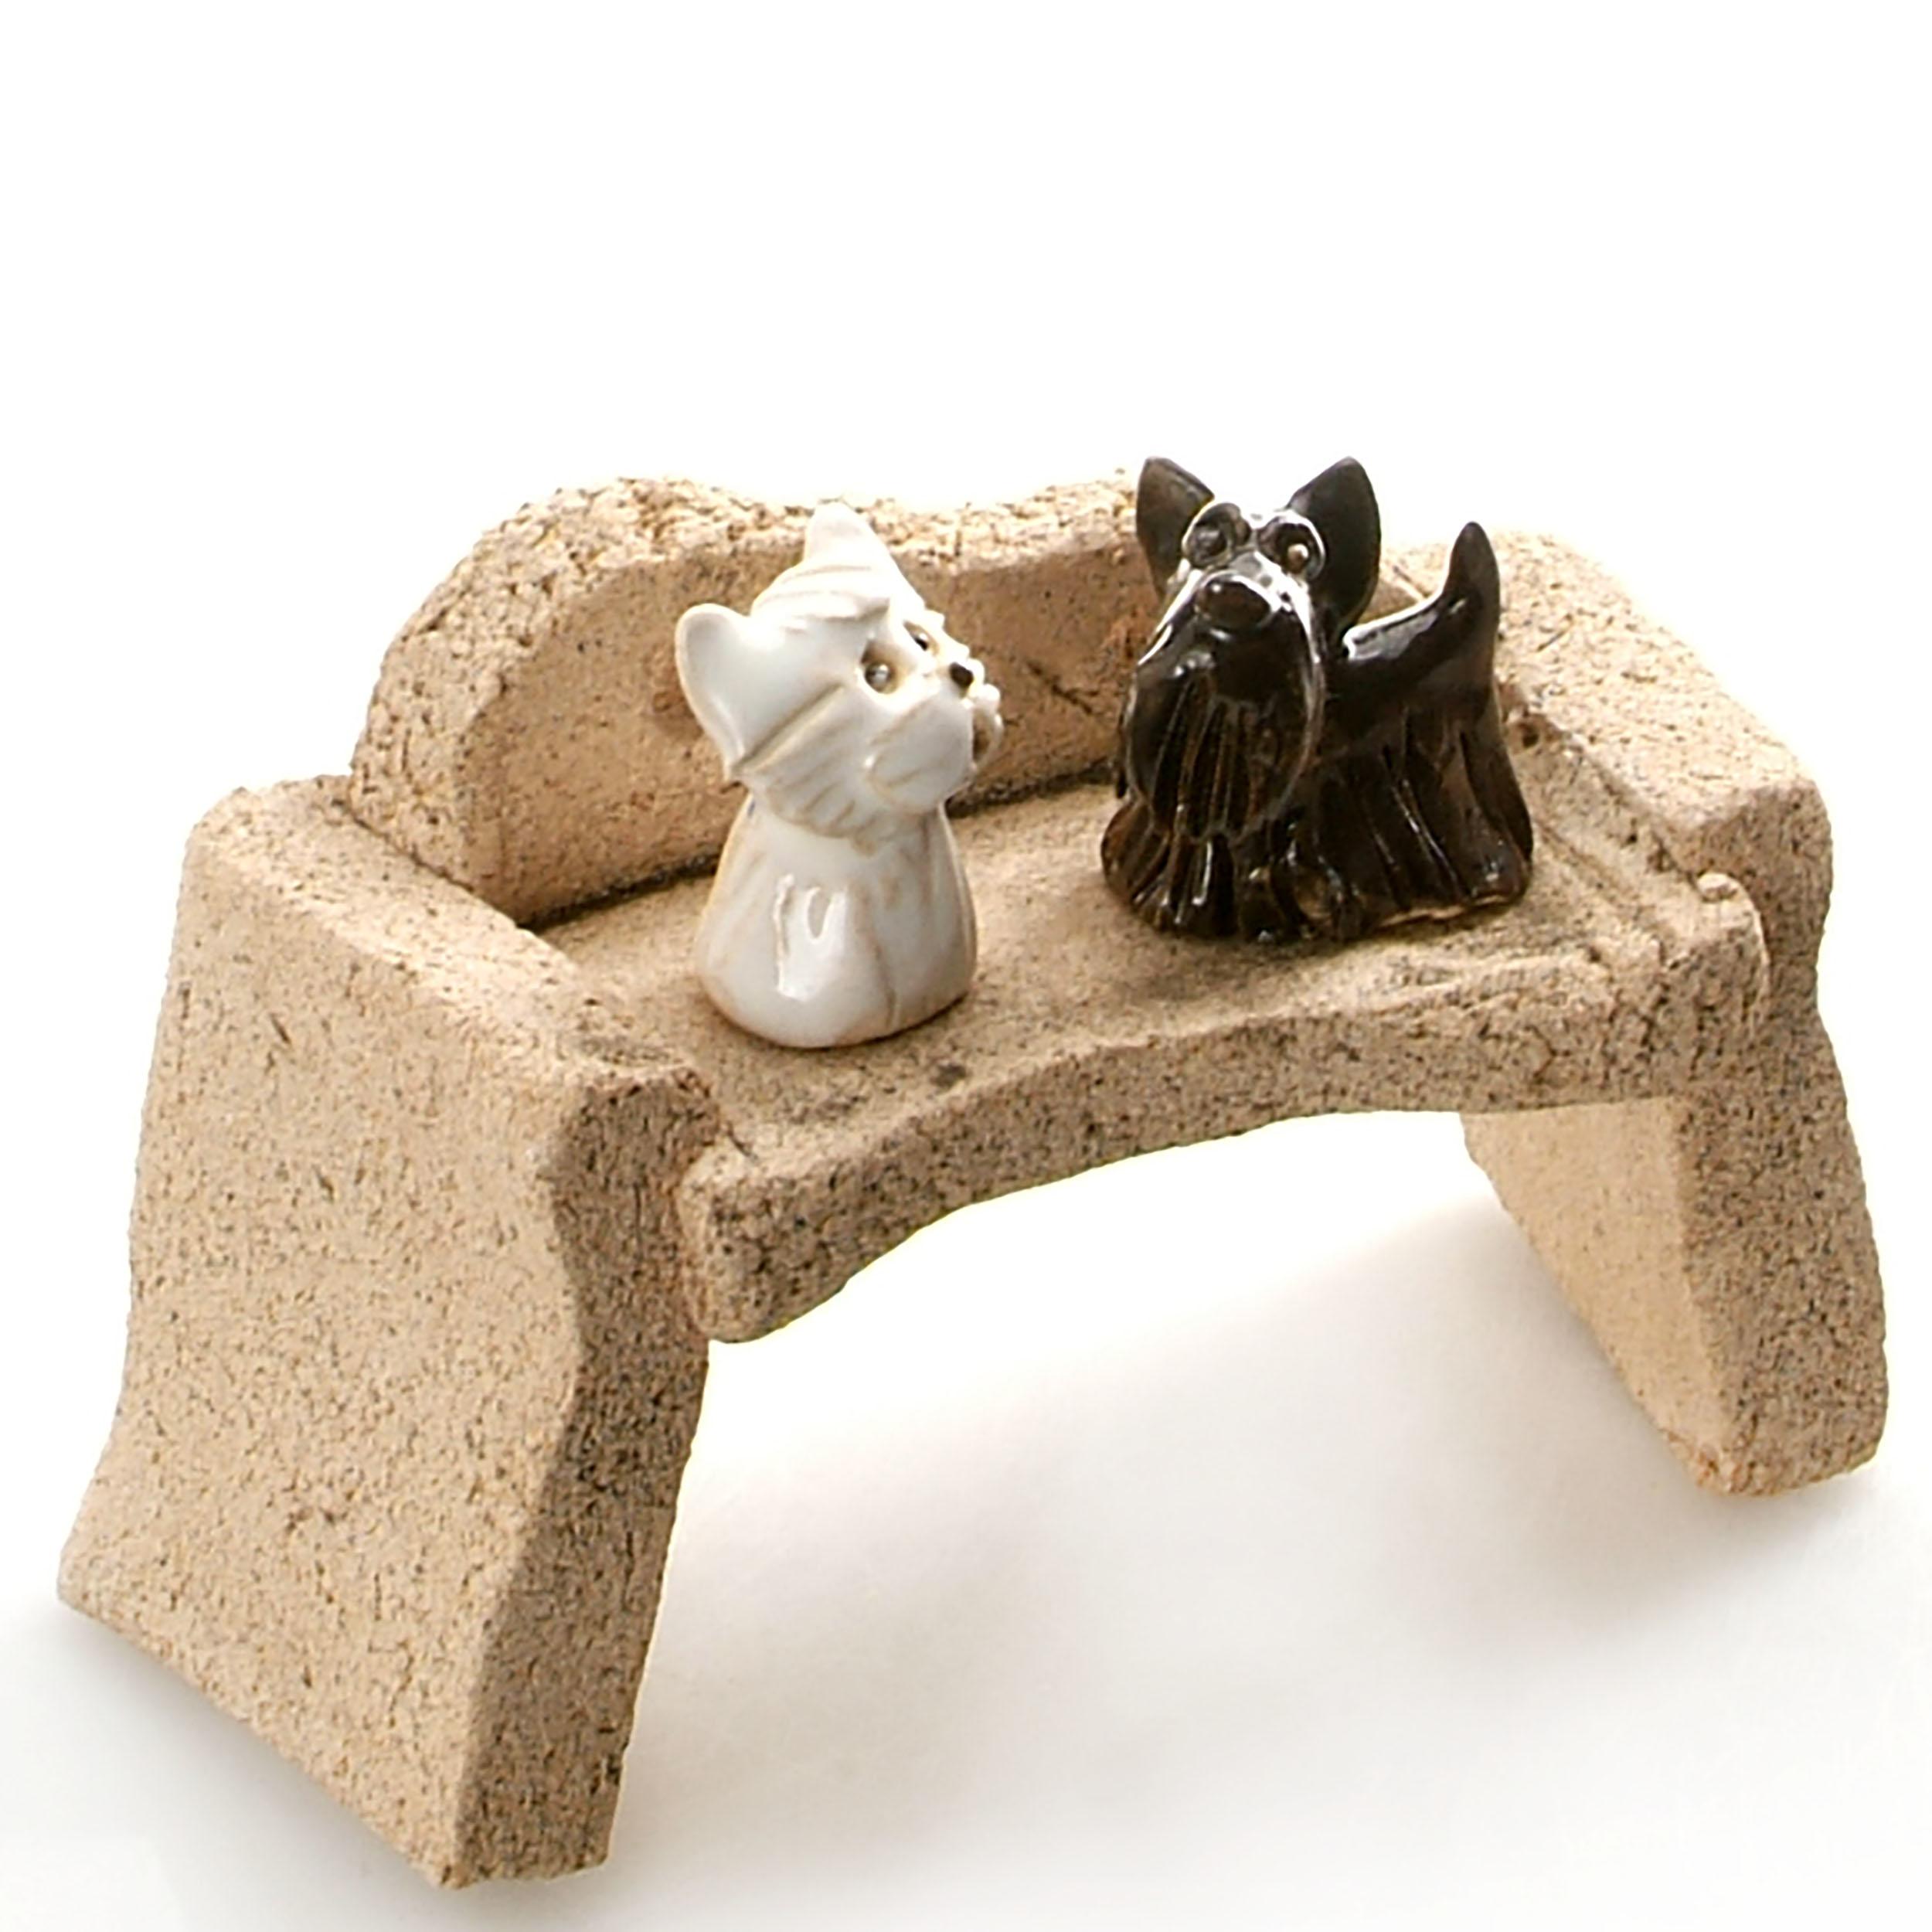 Westie and Scottie Dogs sitting on Bench Hand Sculptured Ceramic